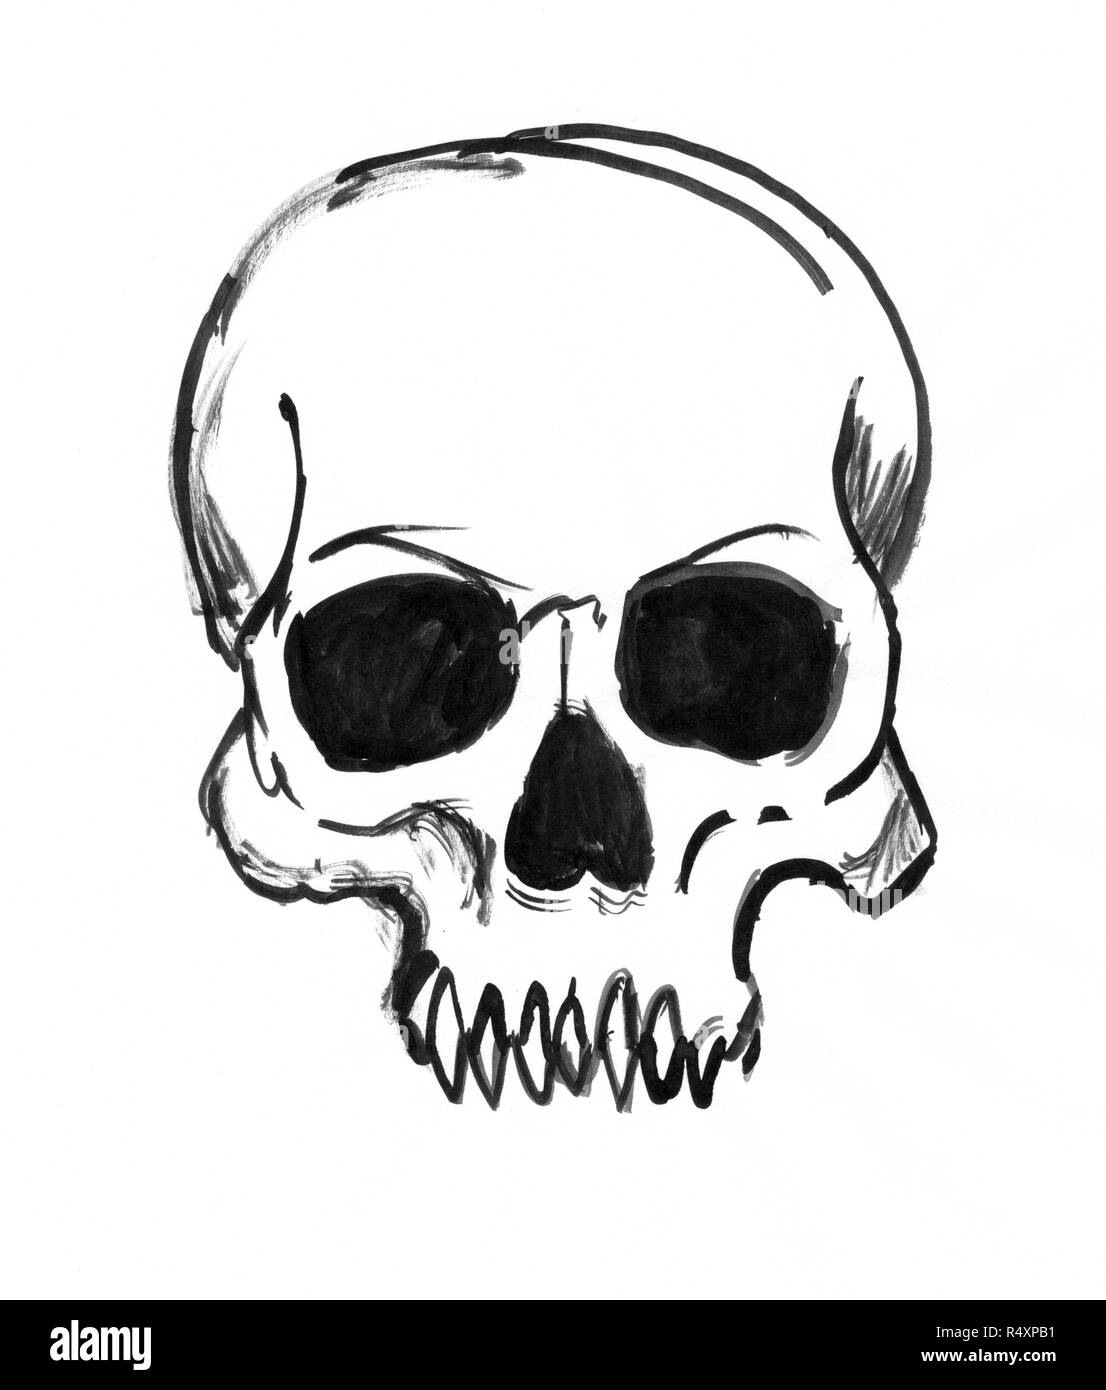 Black Ink Hand Drawing of Human Skull Stock Photo